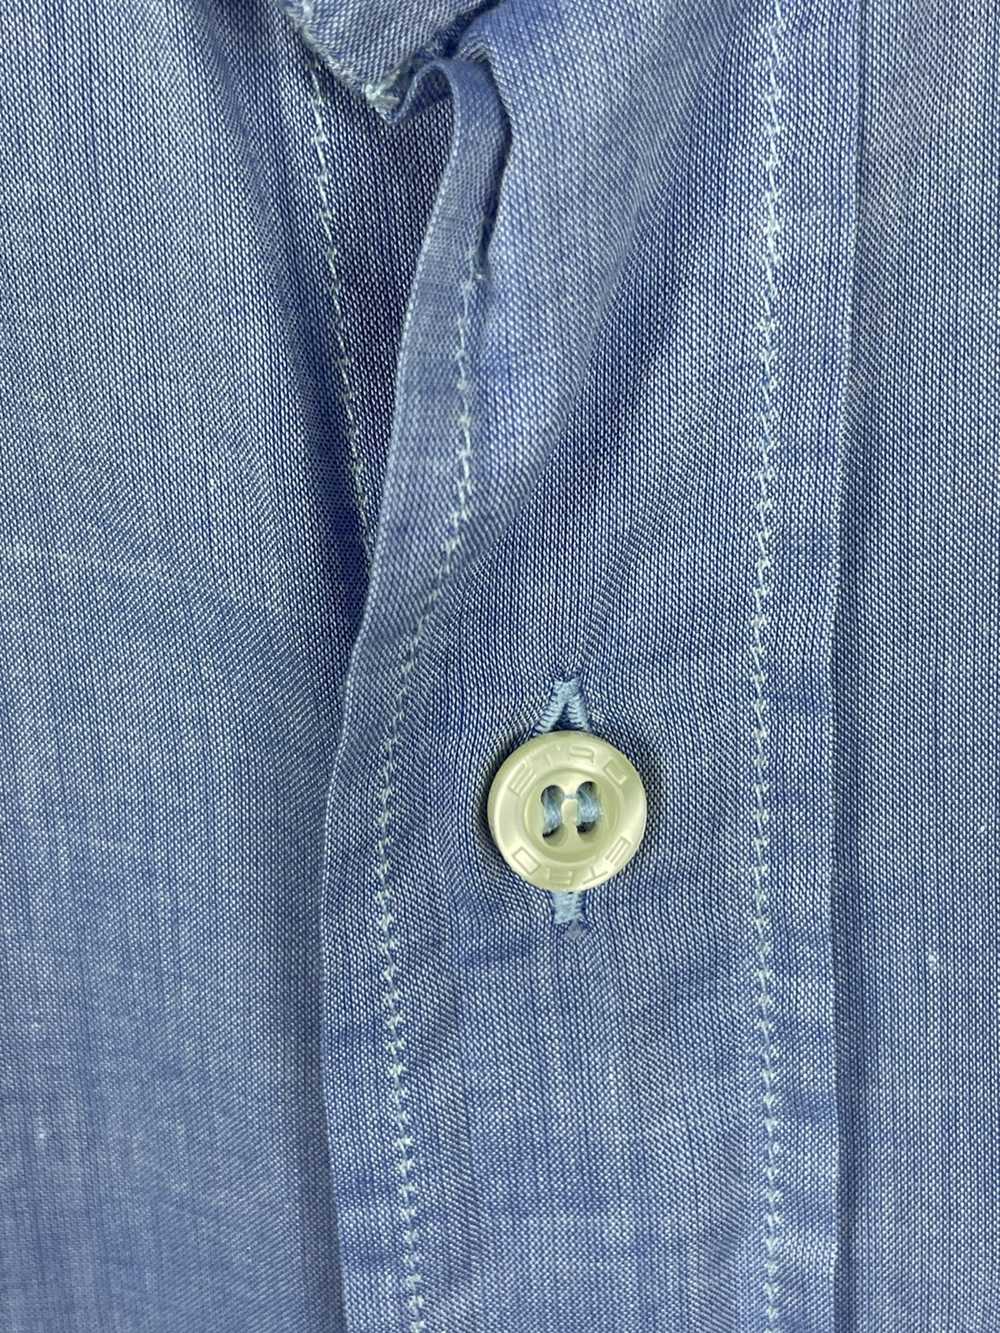 Etro Etro milano Men Shirt Button up size 41-L - image 4